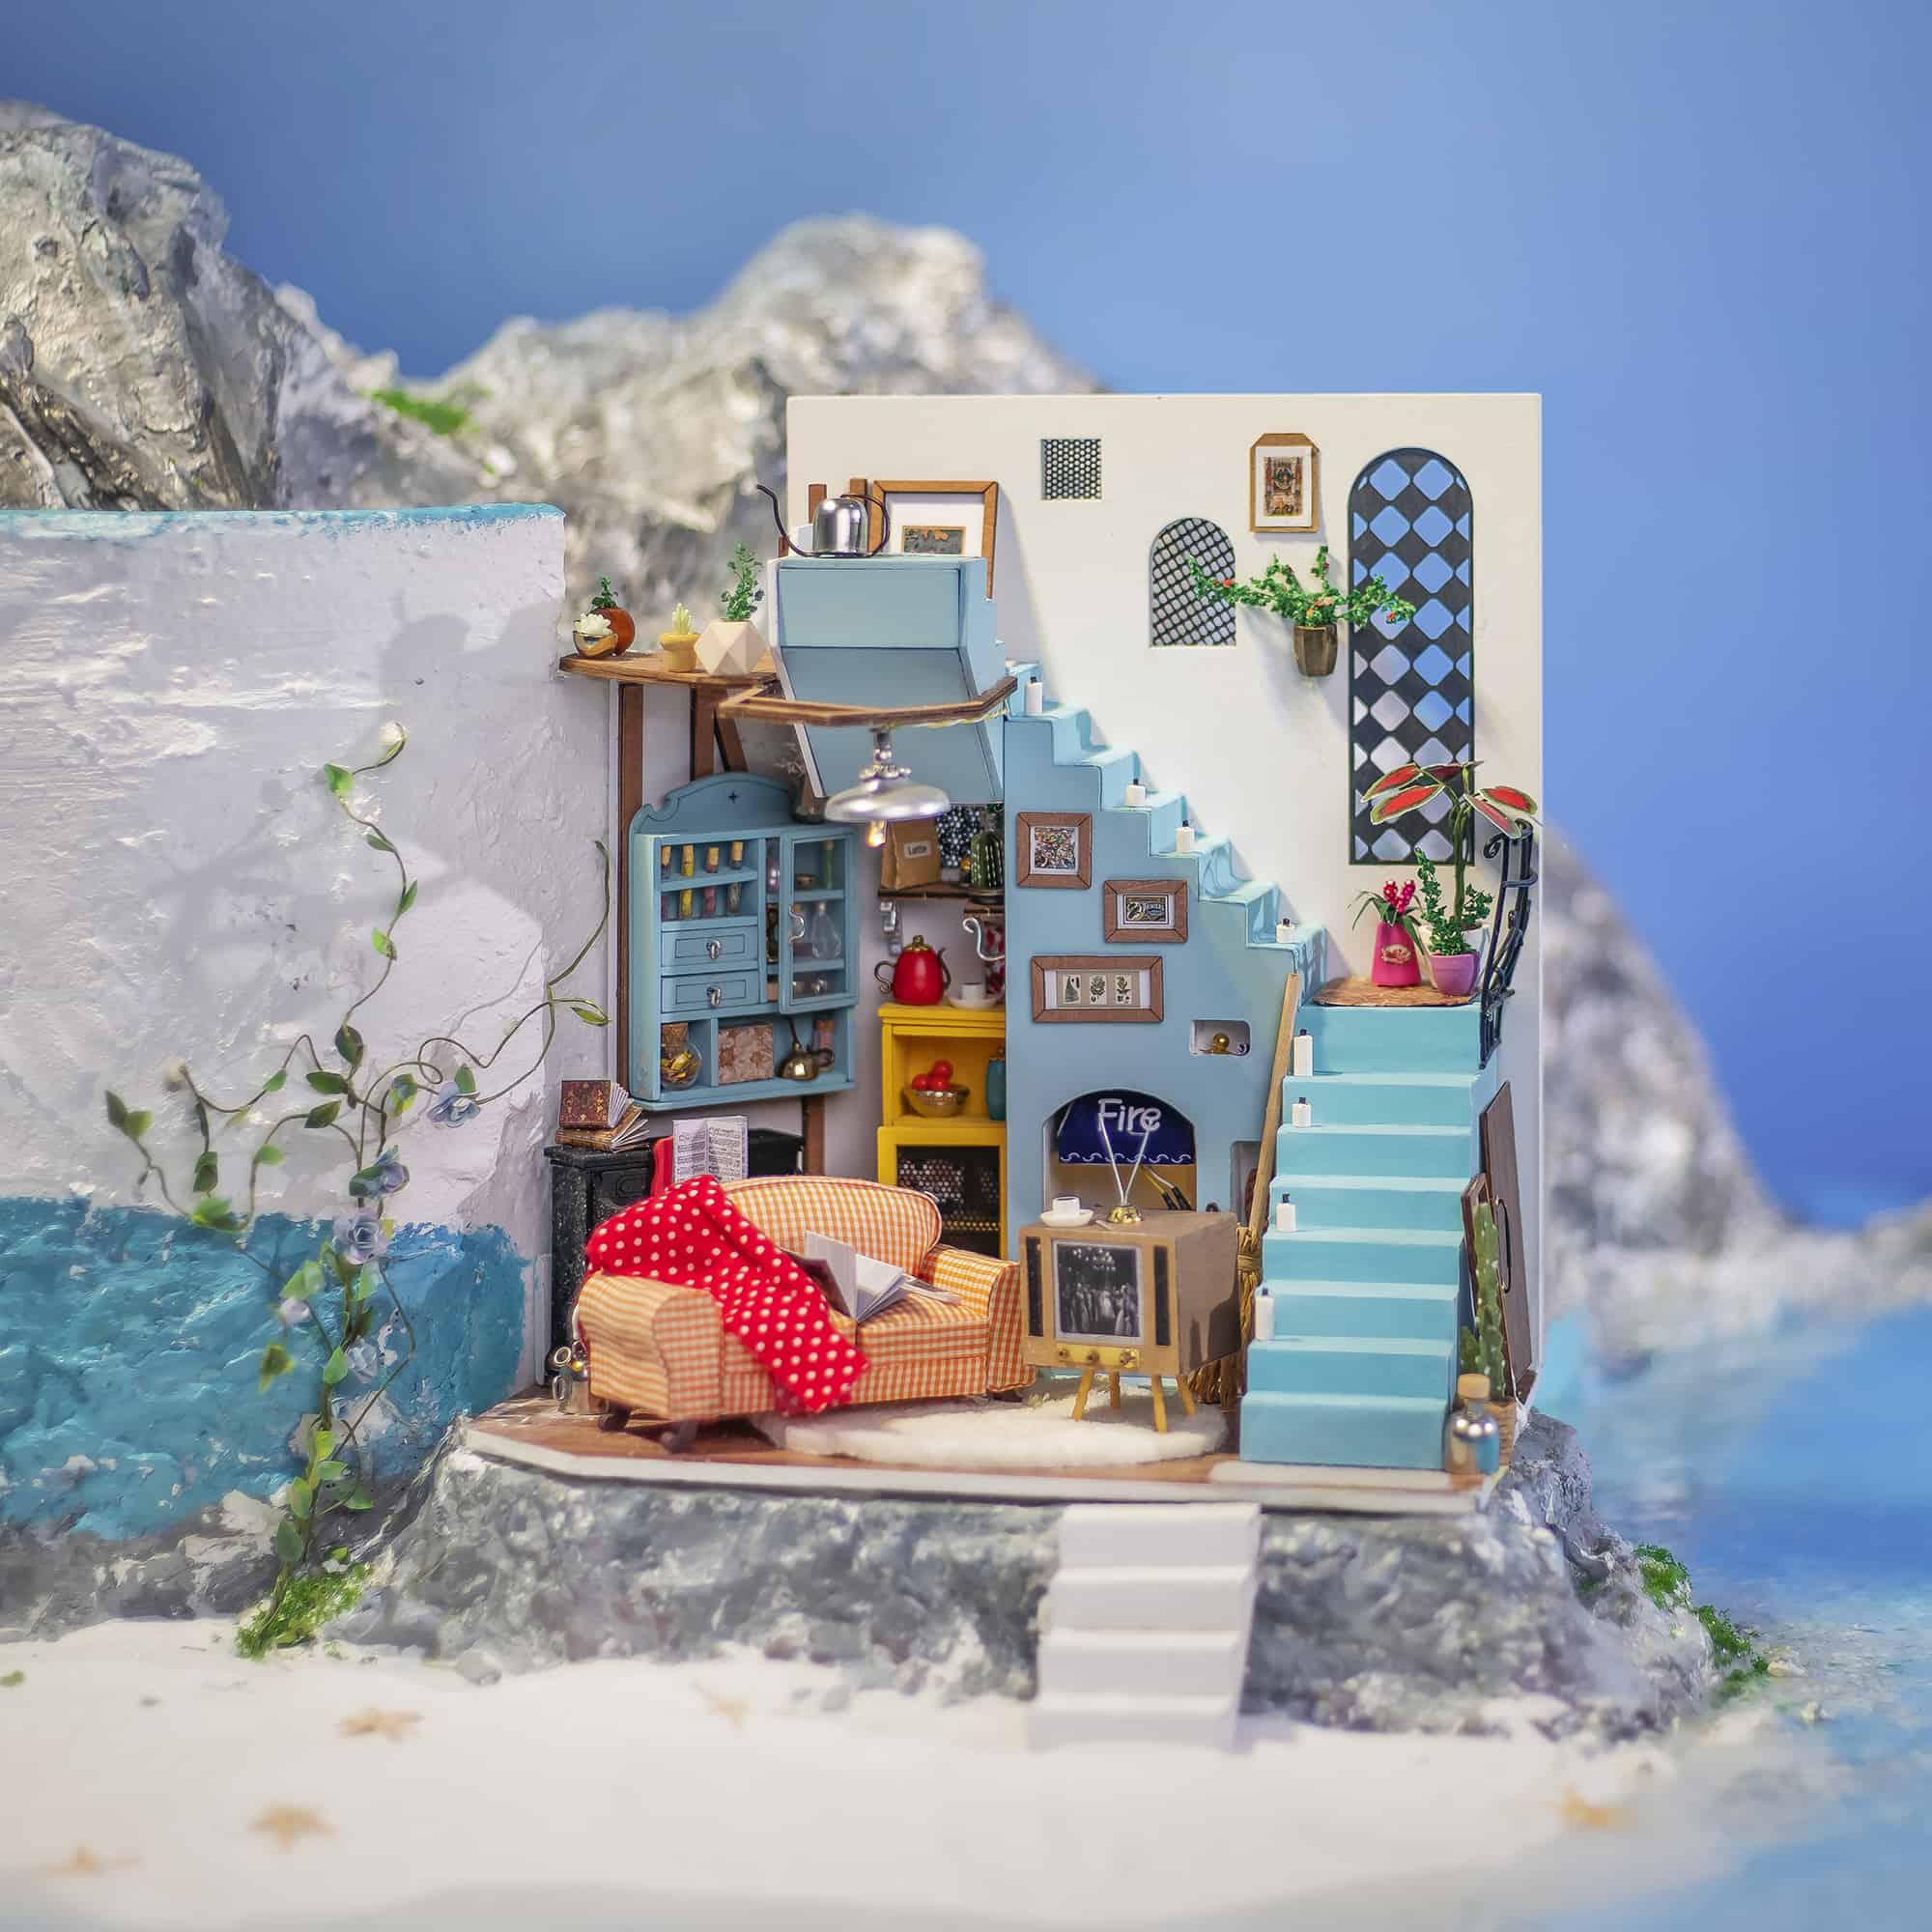 Create A Scene Magnetic Doll House